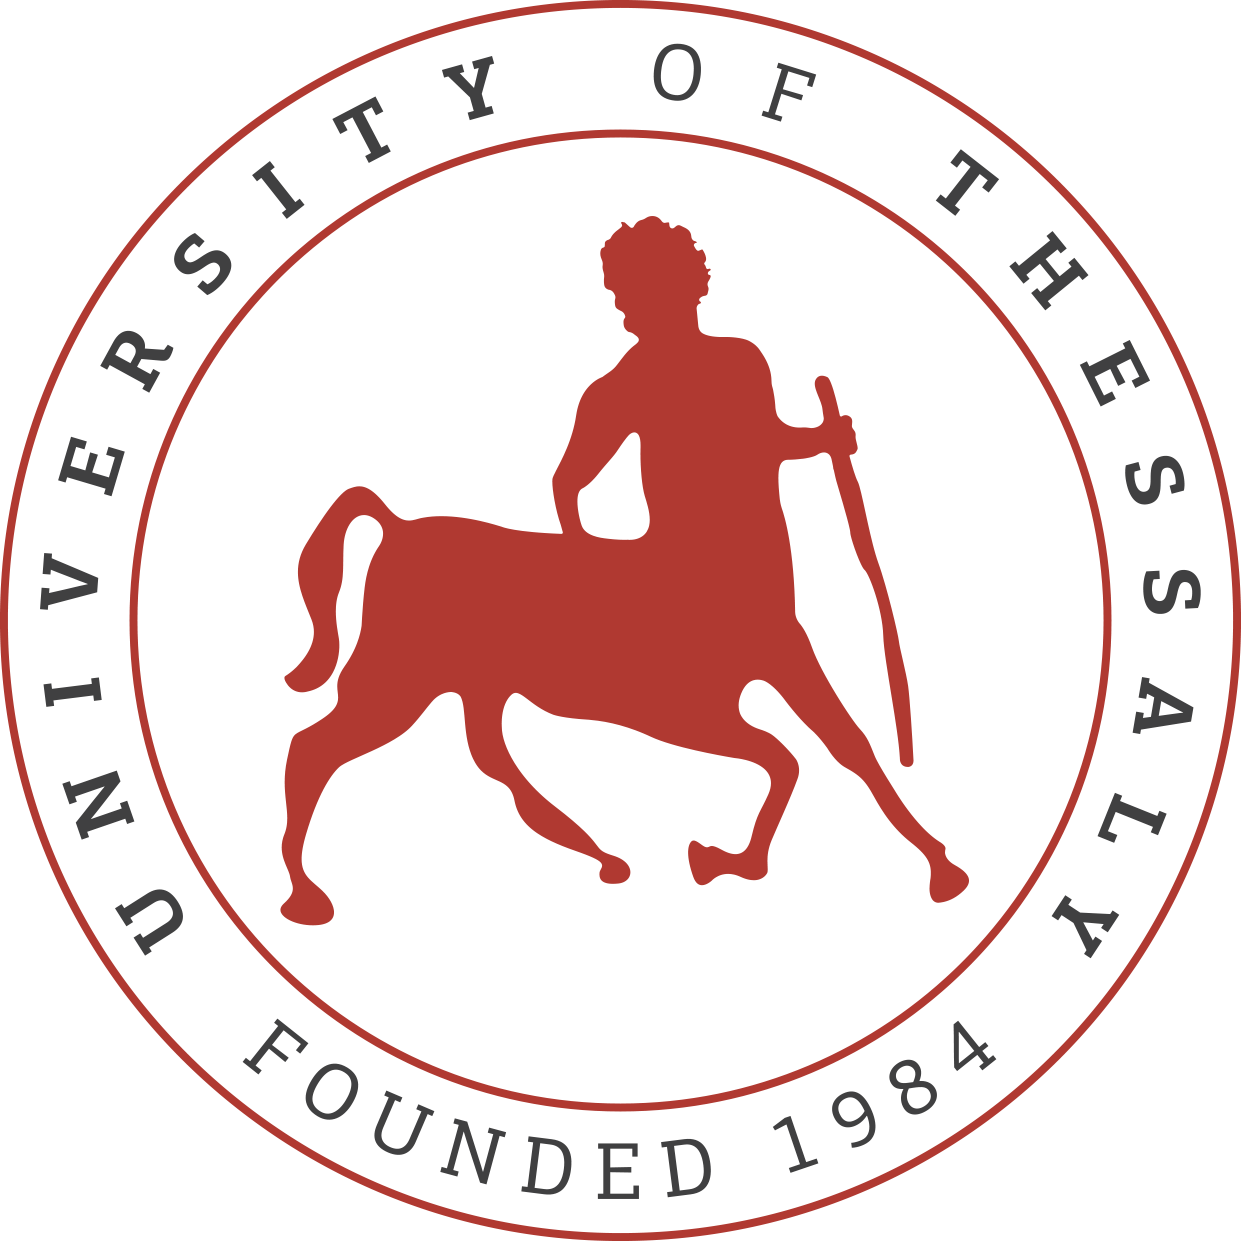 University oi Thessaly logo english